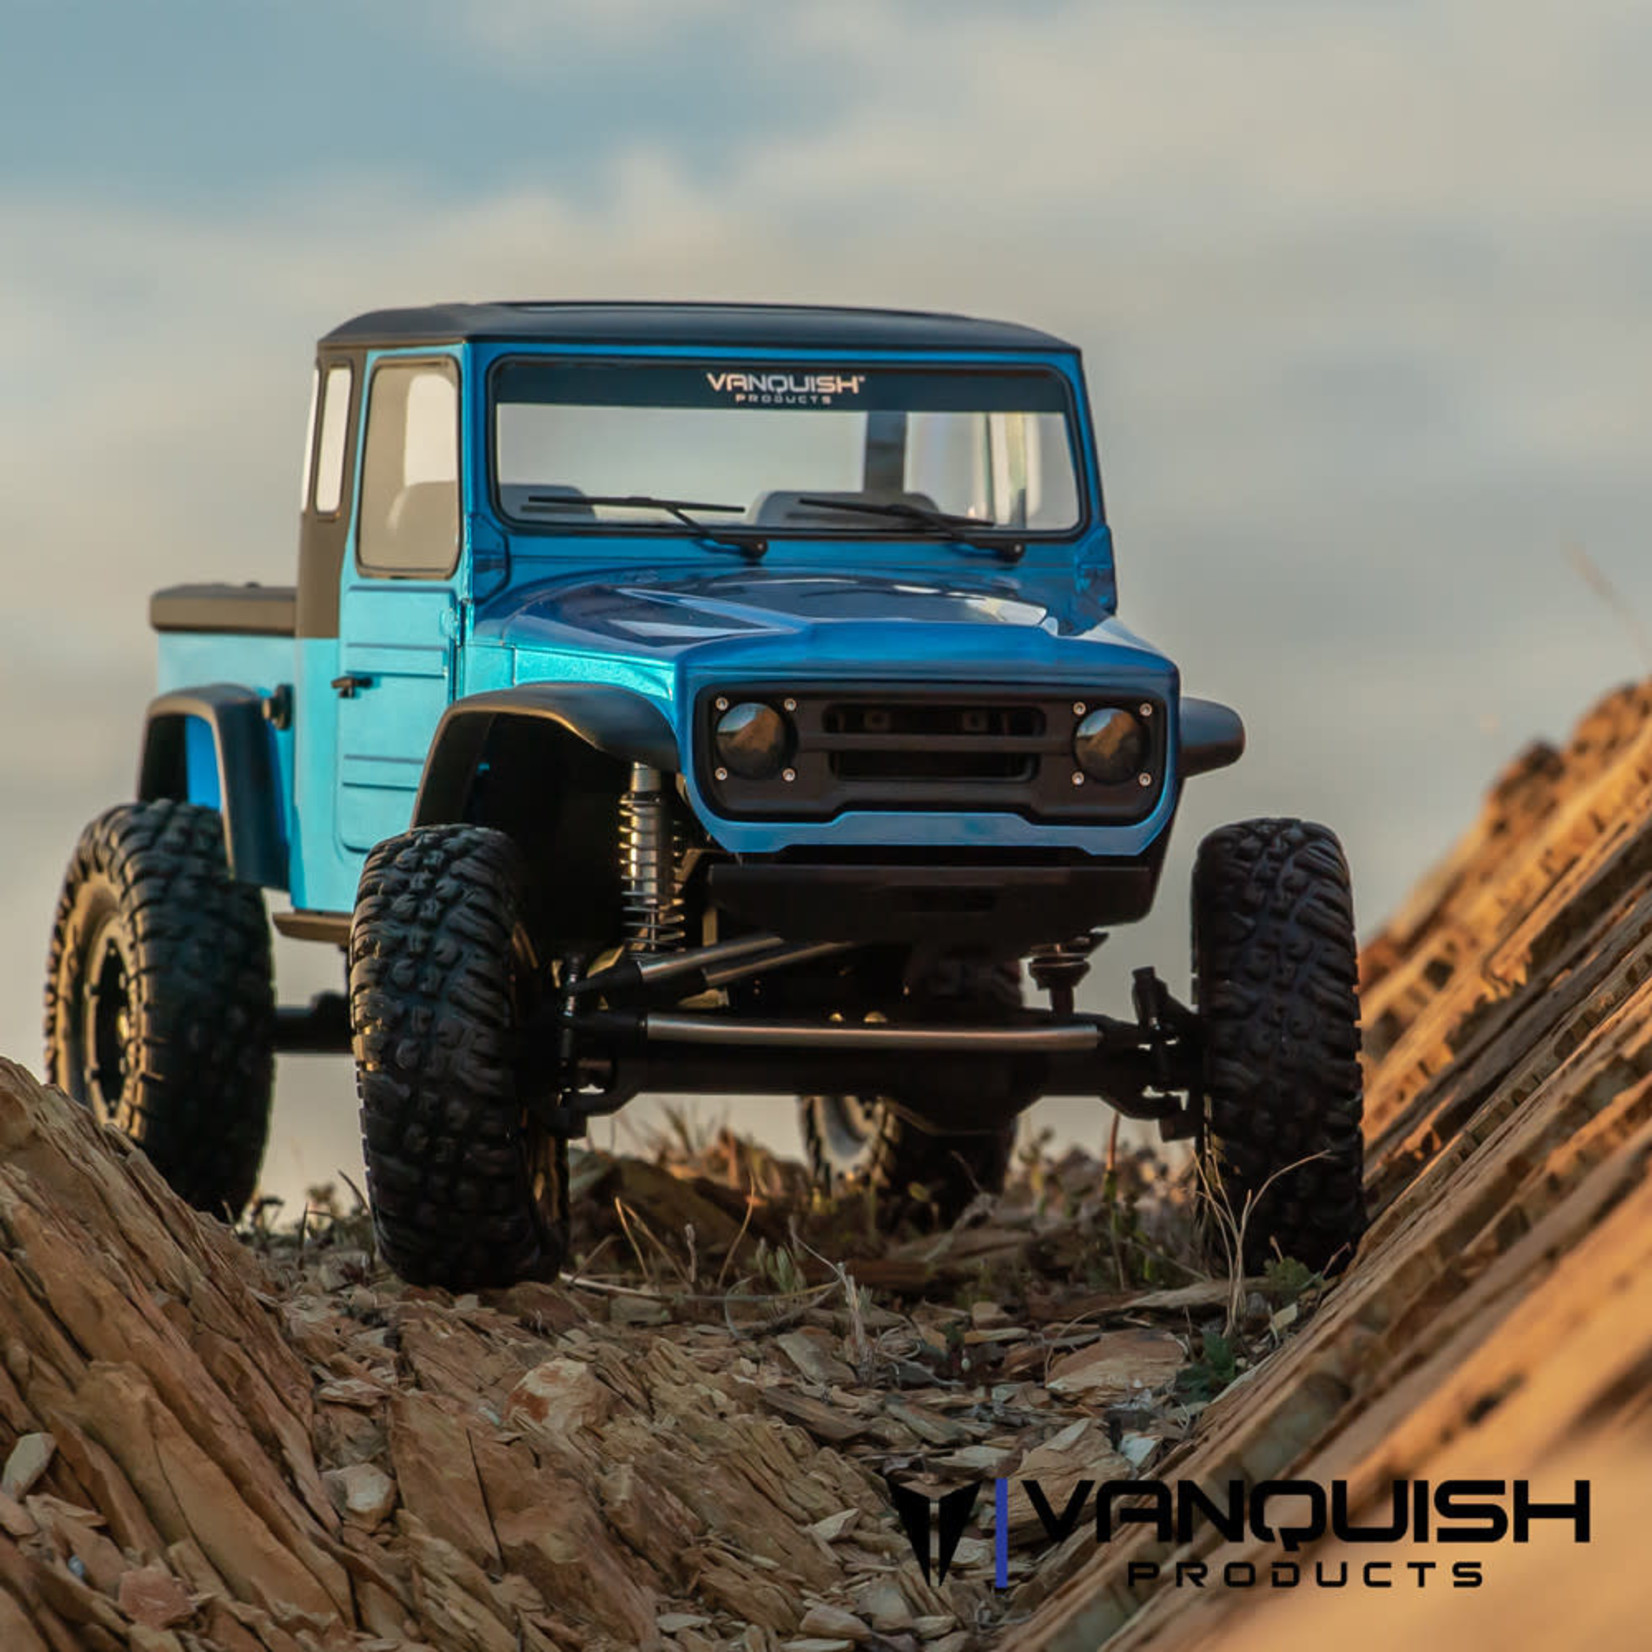 Vanquish Products VS4-10 Phoenix Straight Axle Rock Crawler Kit